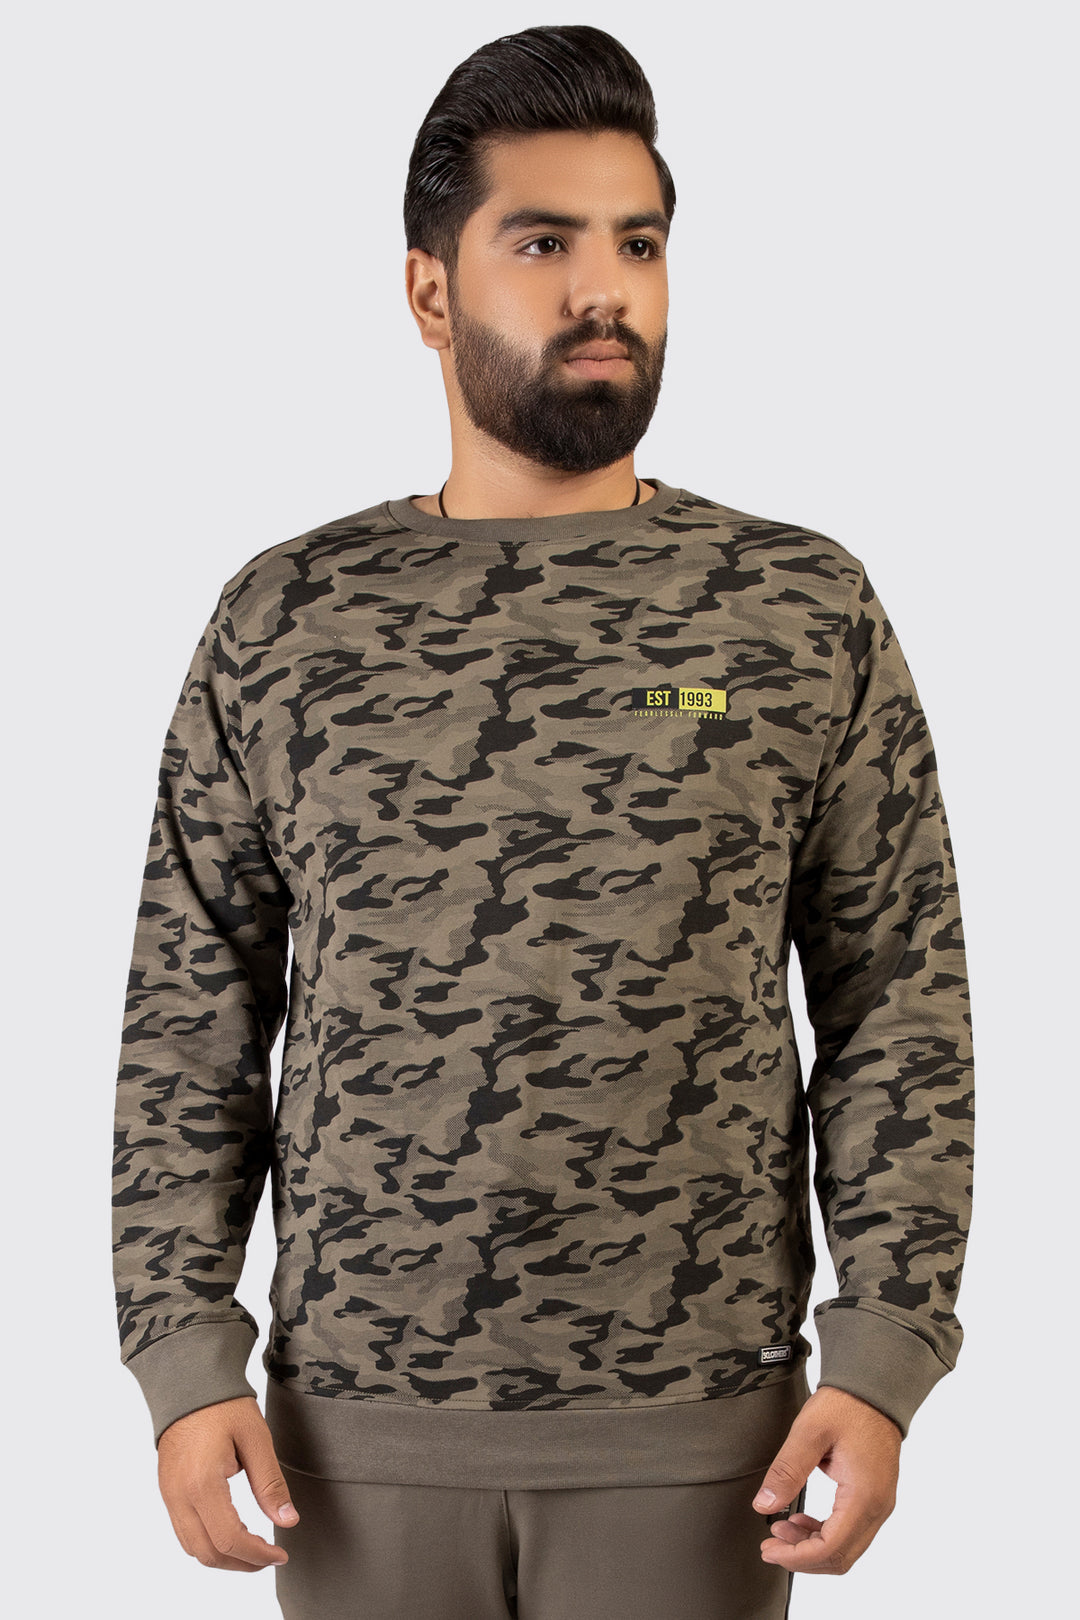 Green Camo Graphic Printed Sweatshirt (Plus Size) - W23 - MSW084P